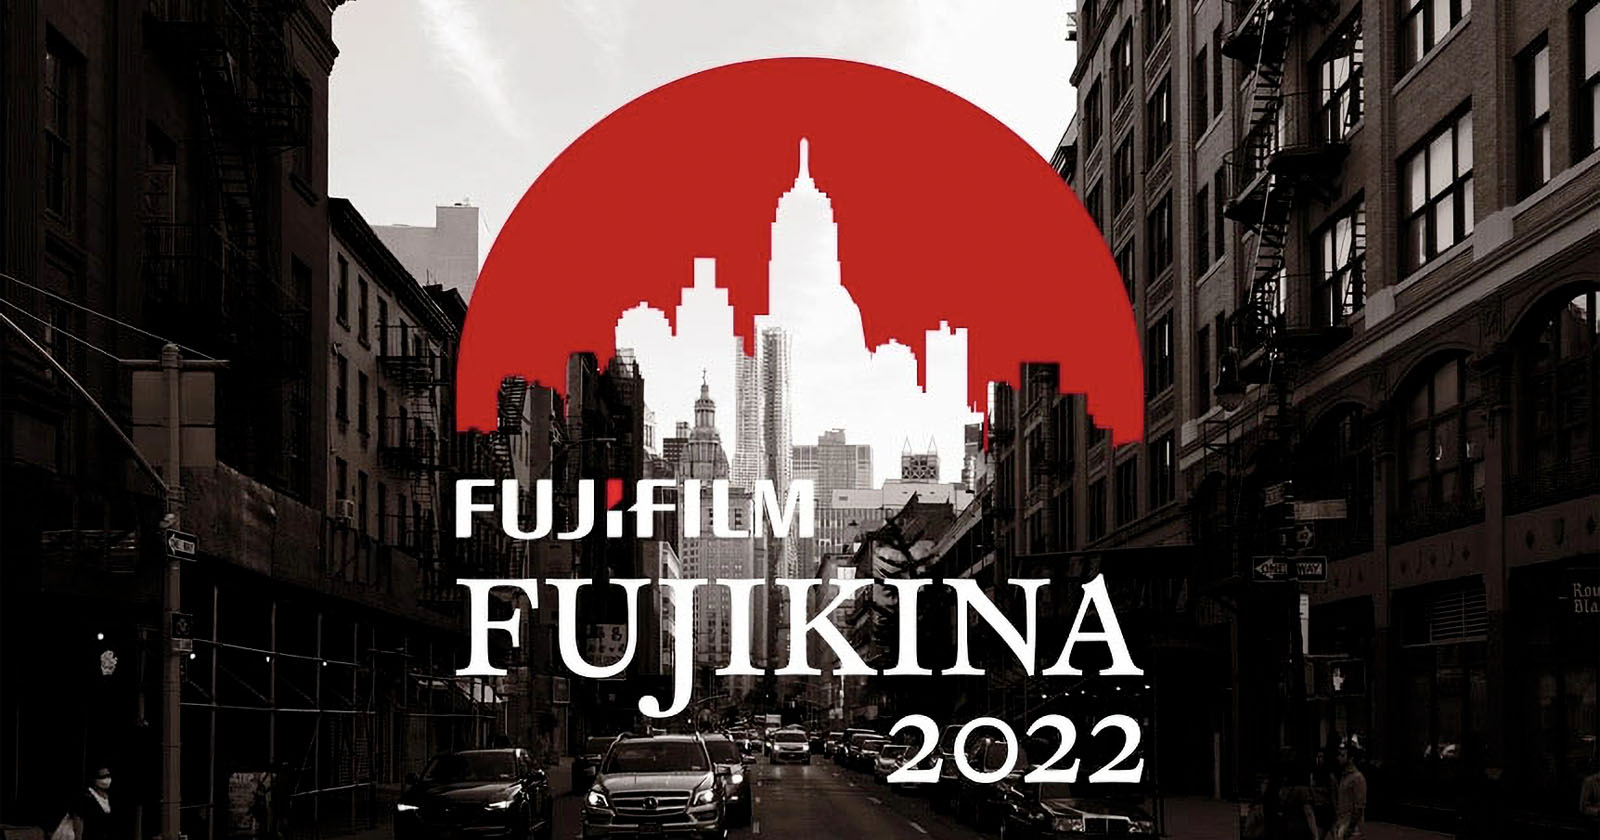 Fujifilm to Host ‘Fujikina’ Photo Festival in New York This Fall